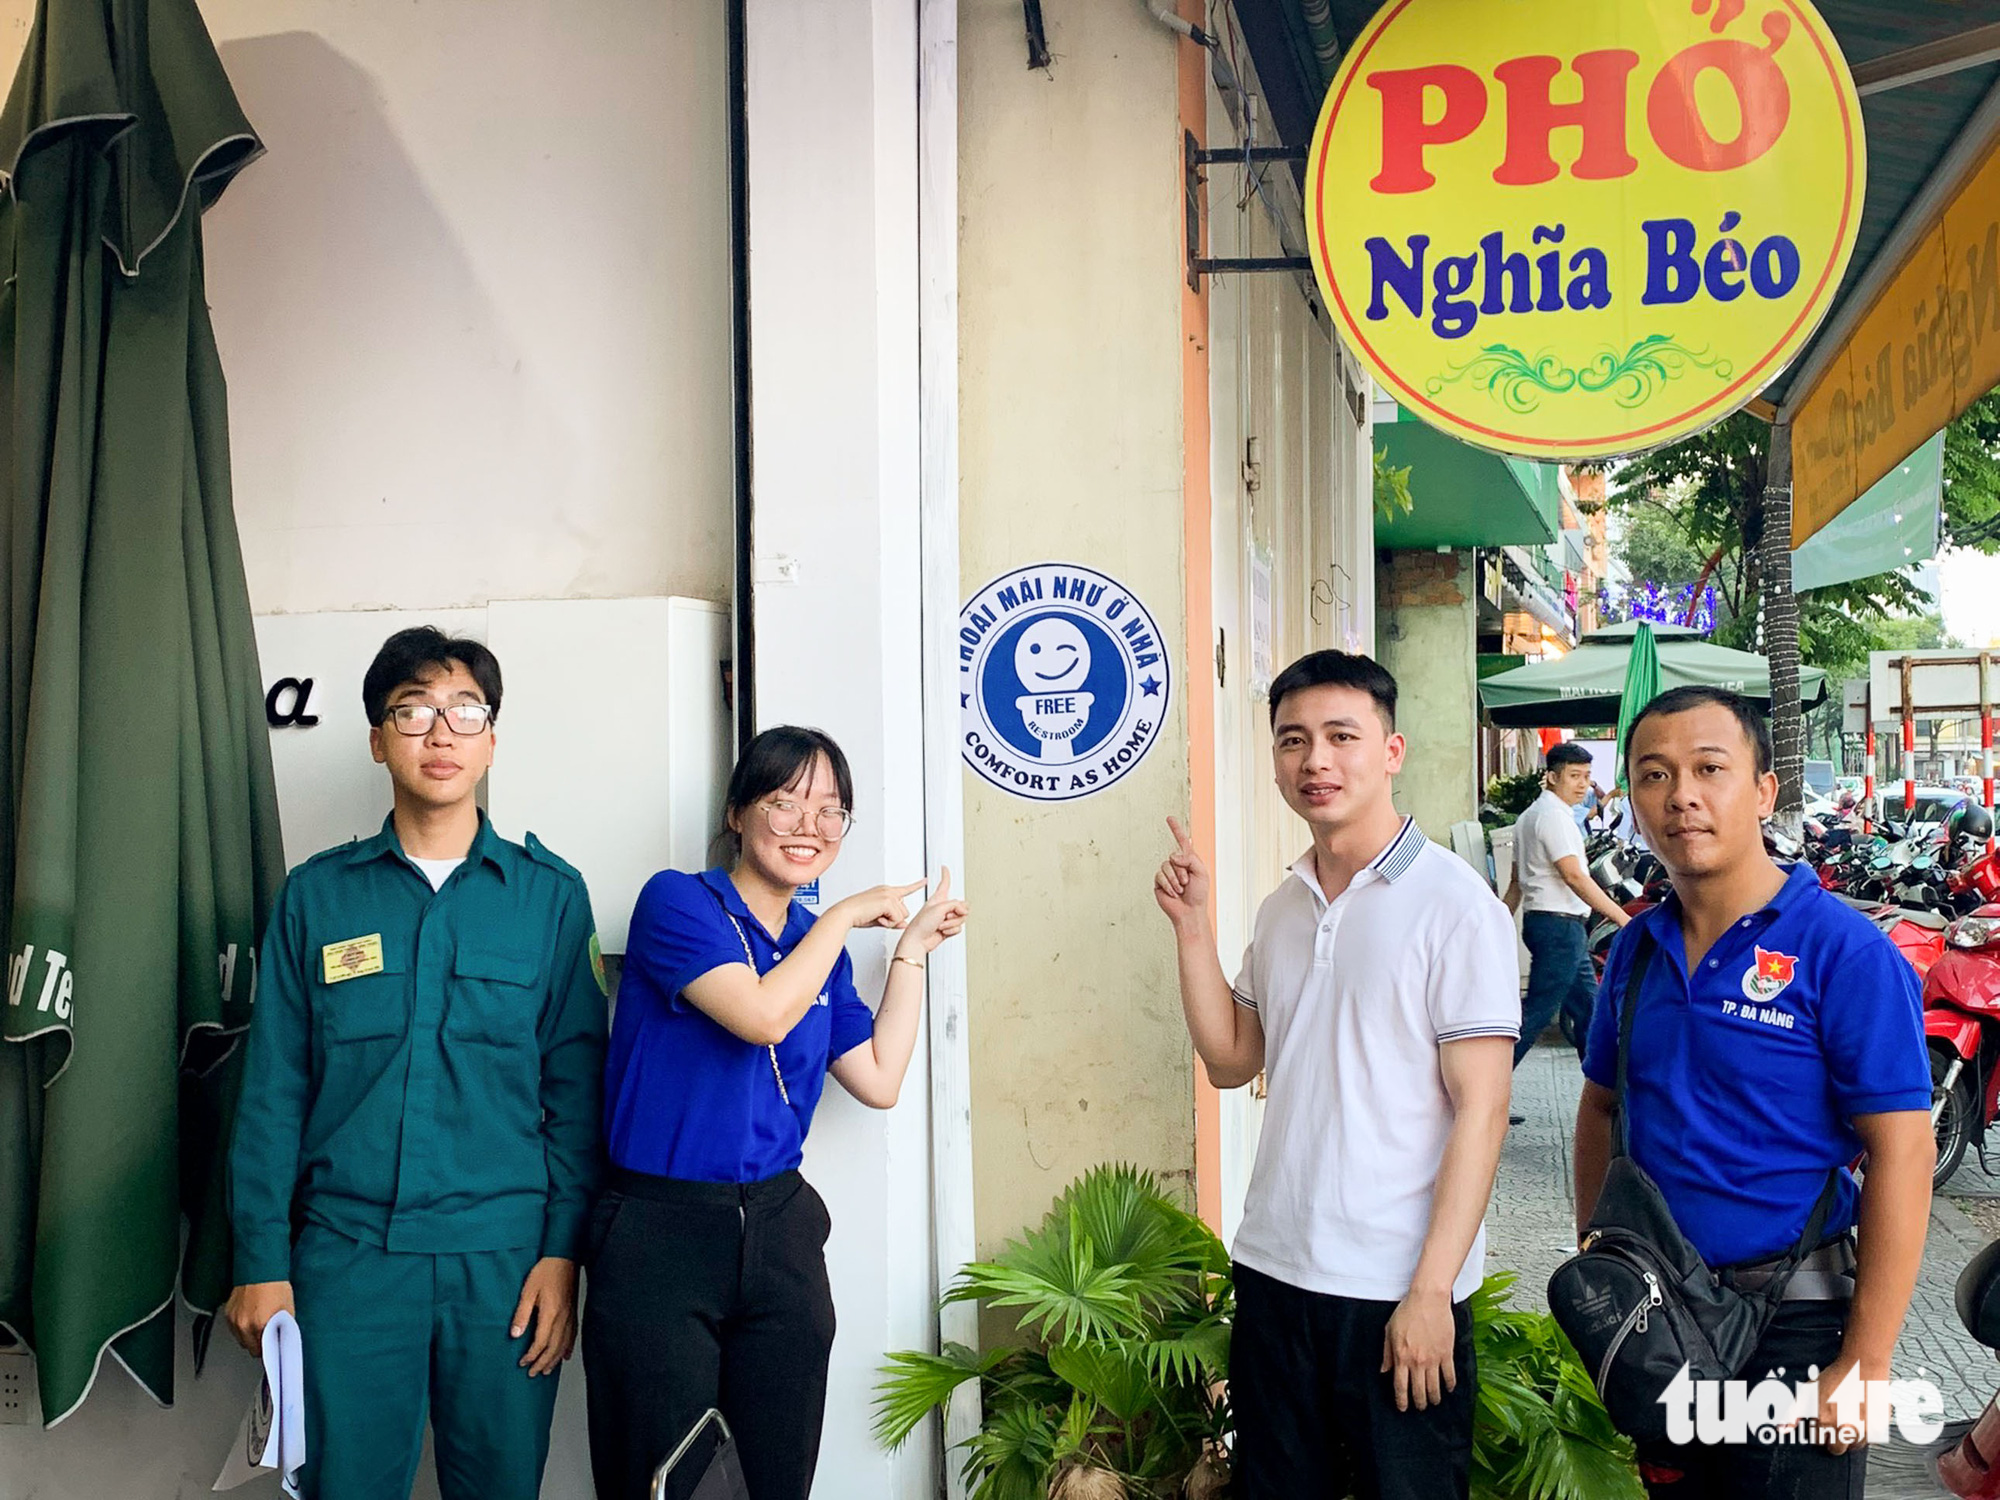 288 business establishments in Da Nang offer free restrooms